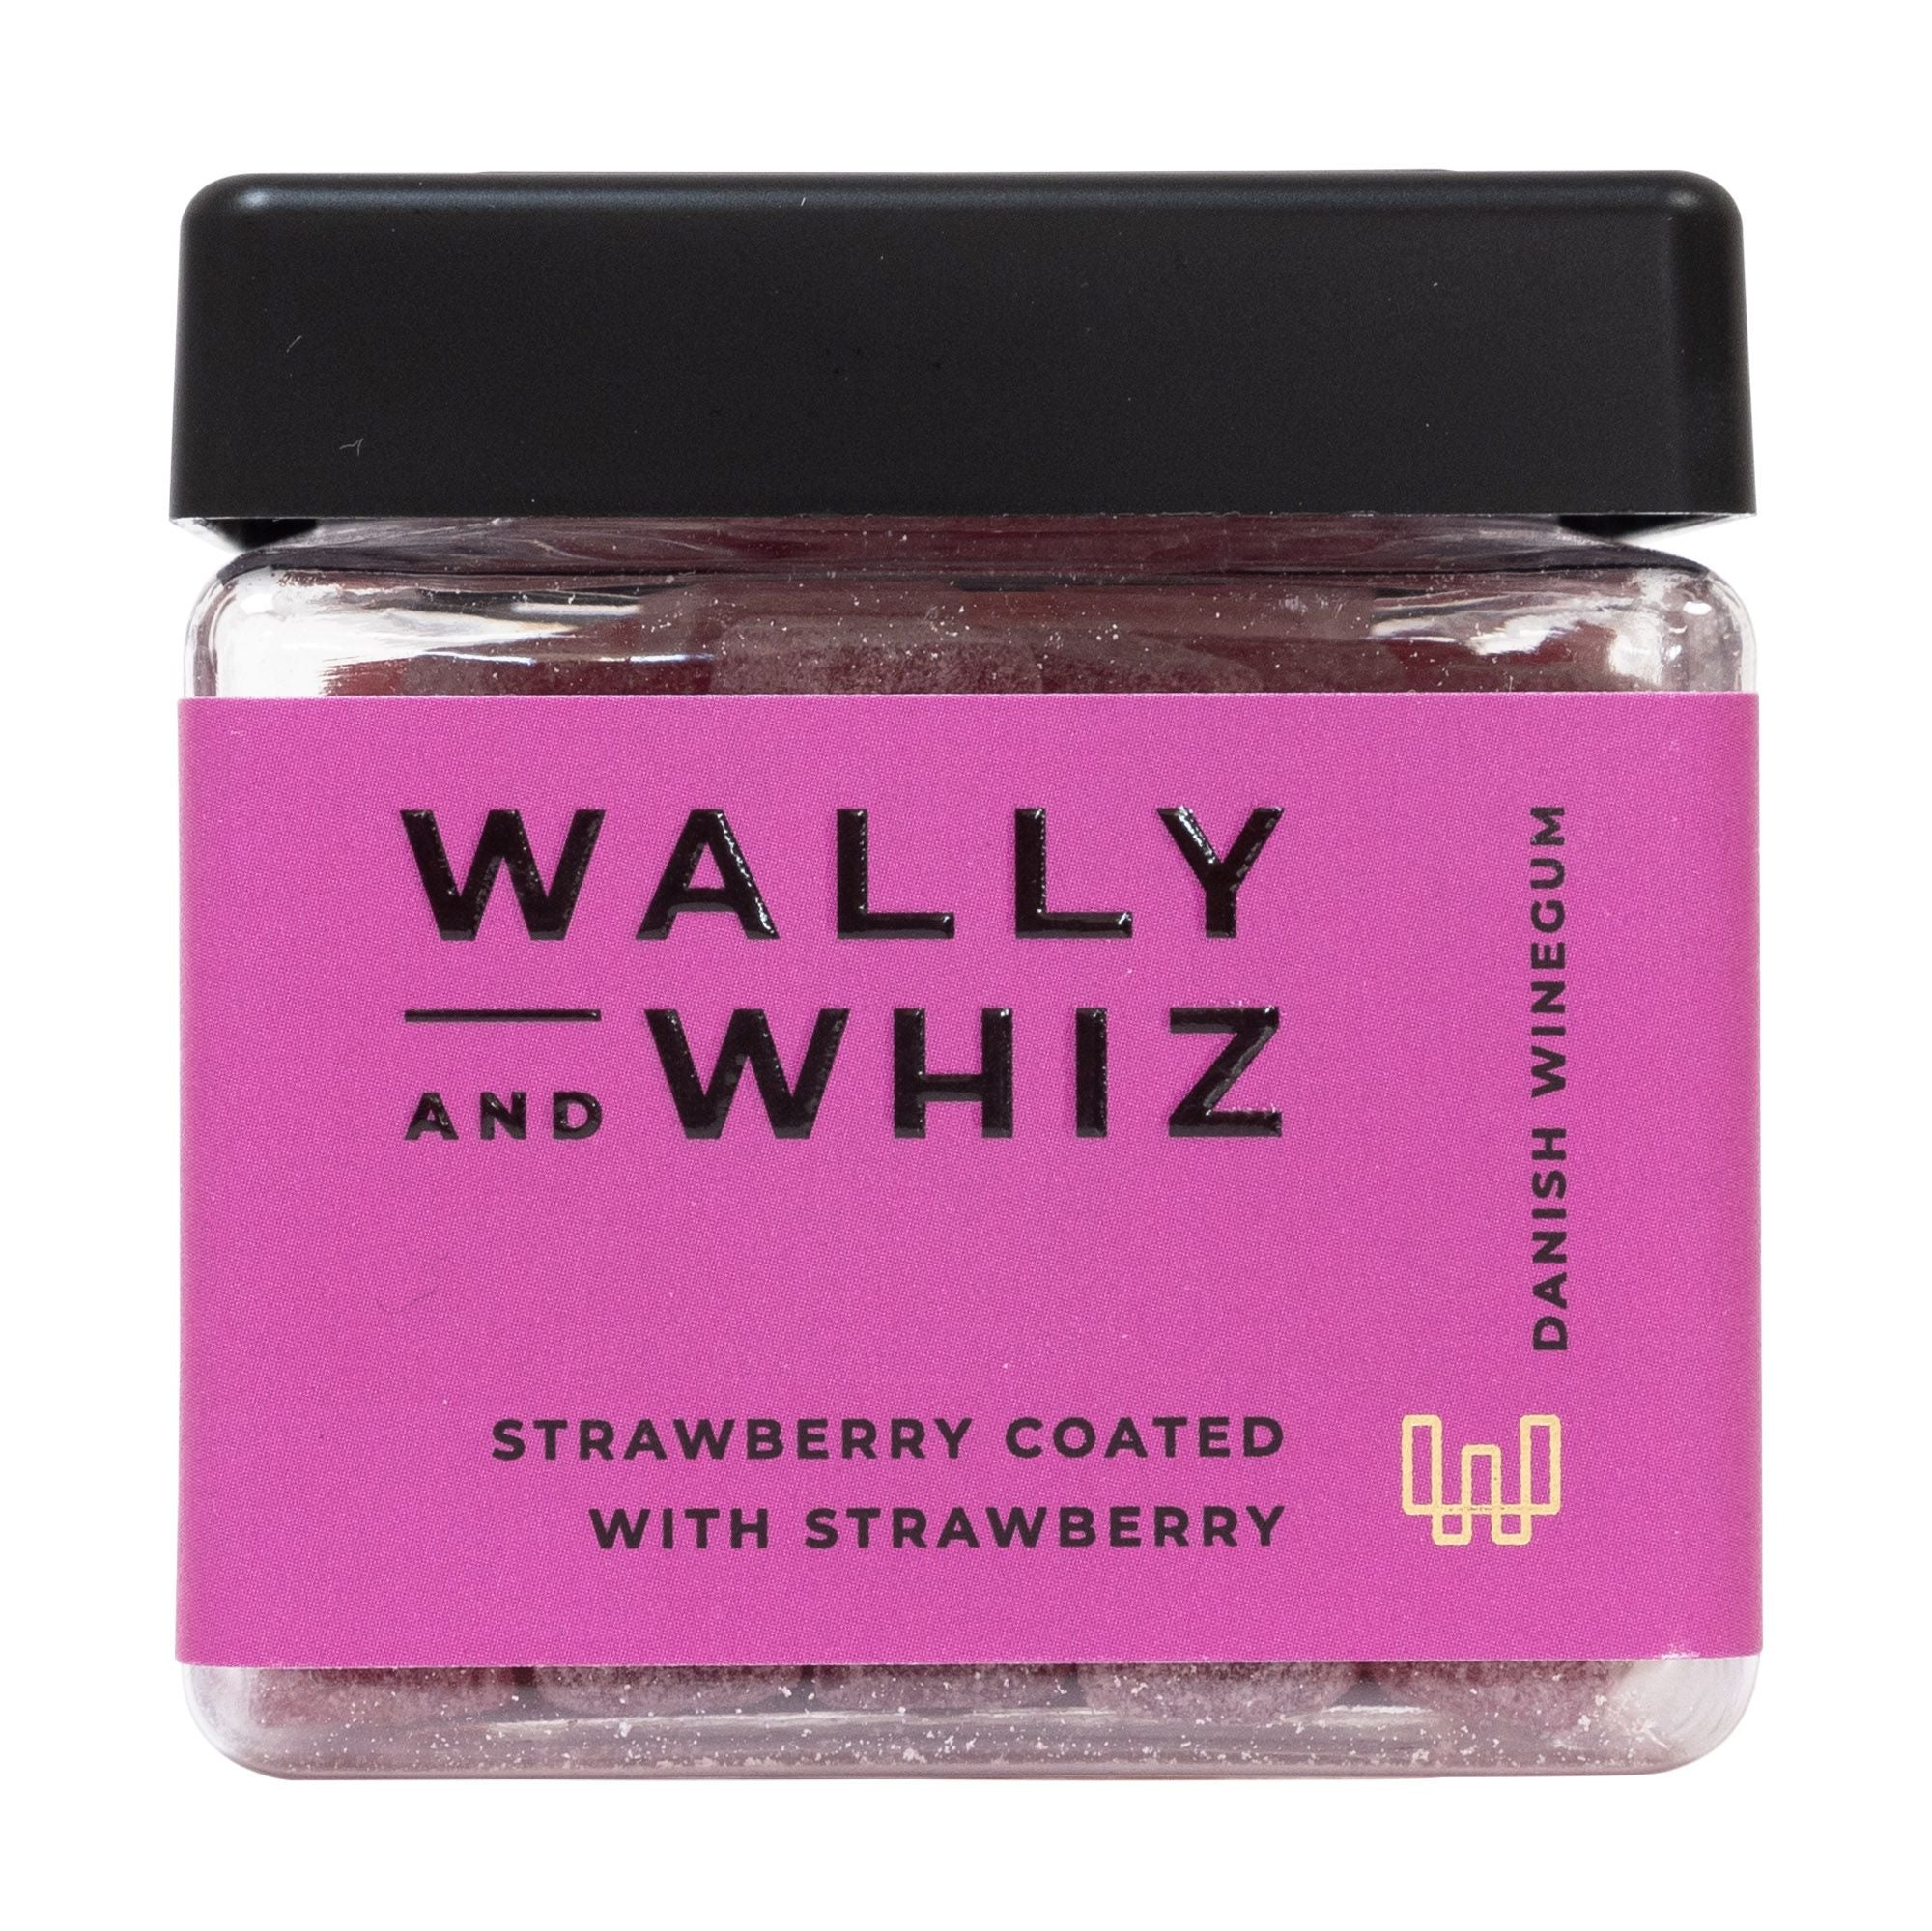 Wally And Whiz Sommarvinnummikub, jordgubbe med jordgubbe, 140 g